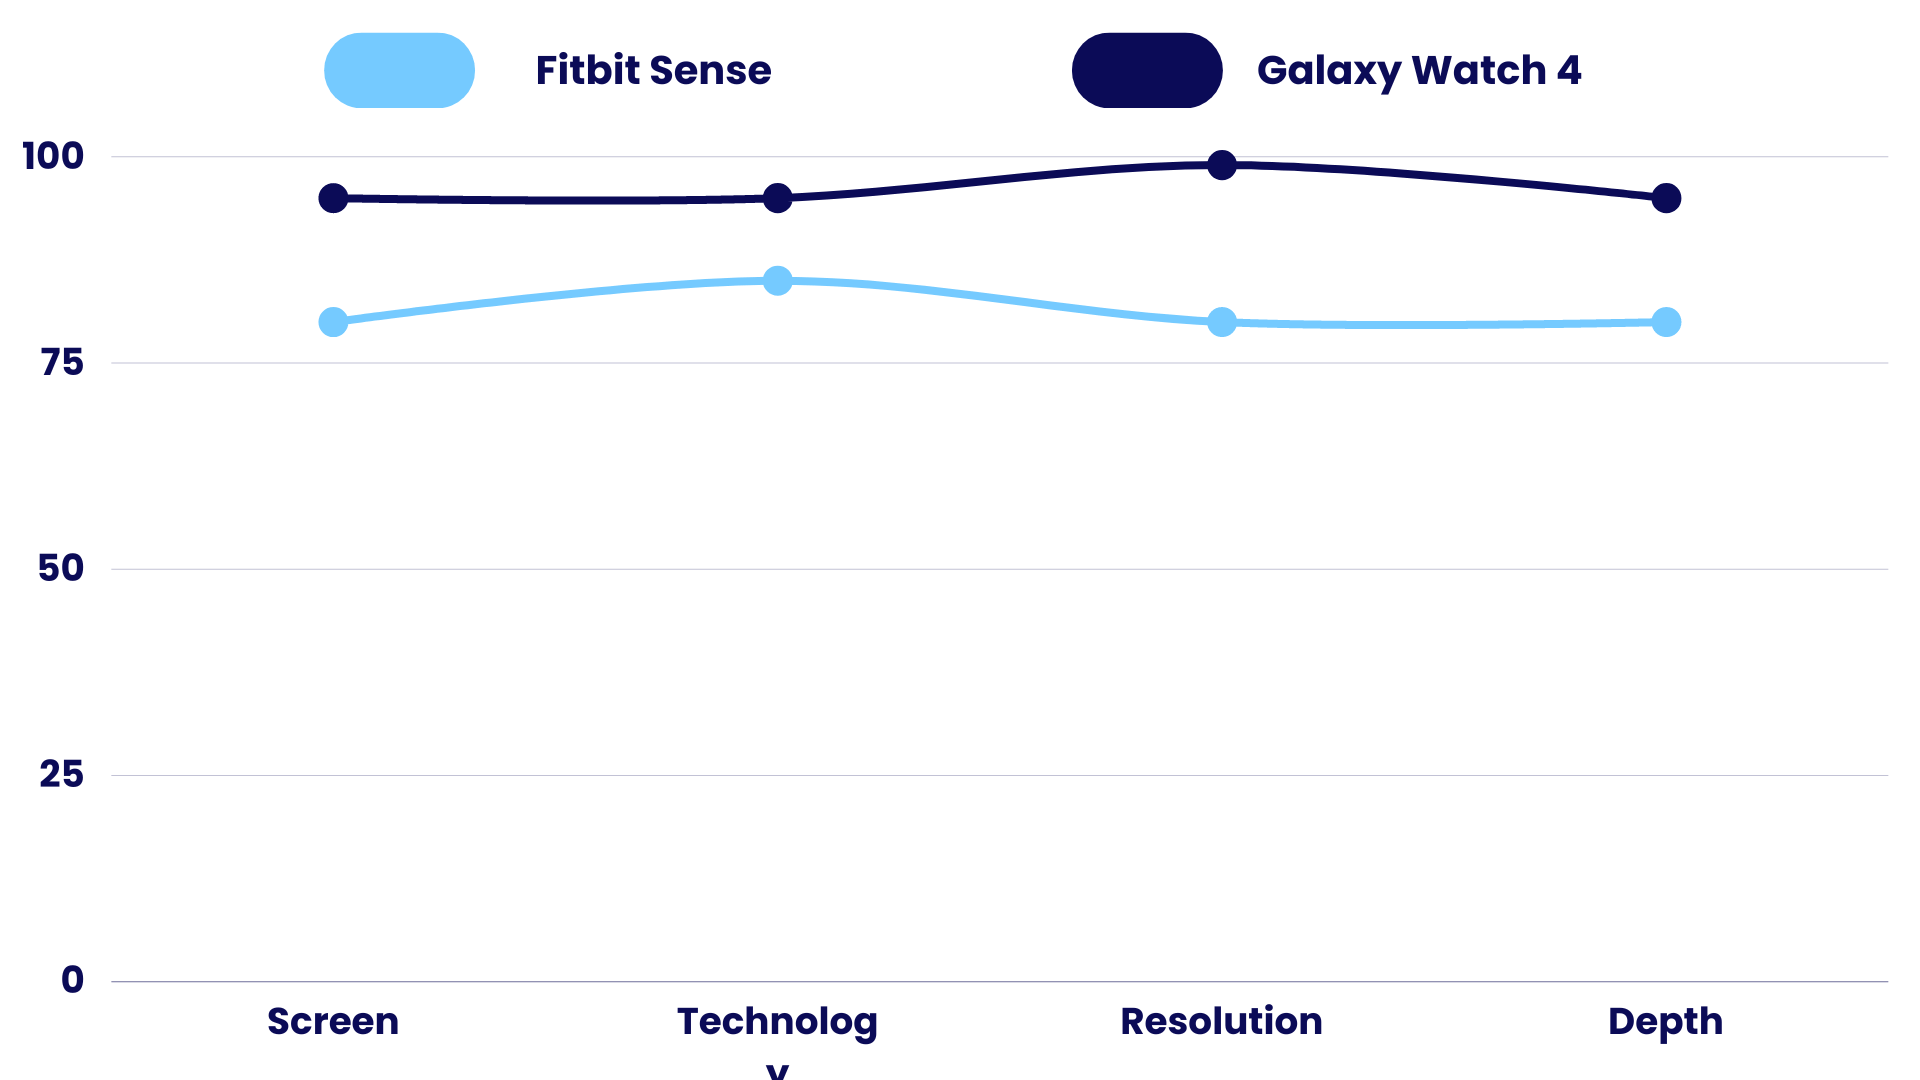 Display Comparison of Fitbit Sense vs Galaxy Watch 4